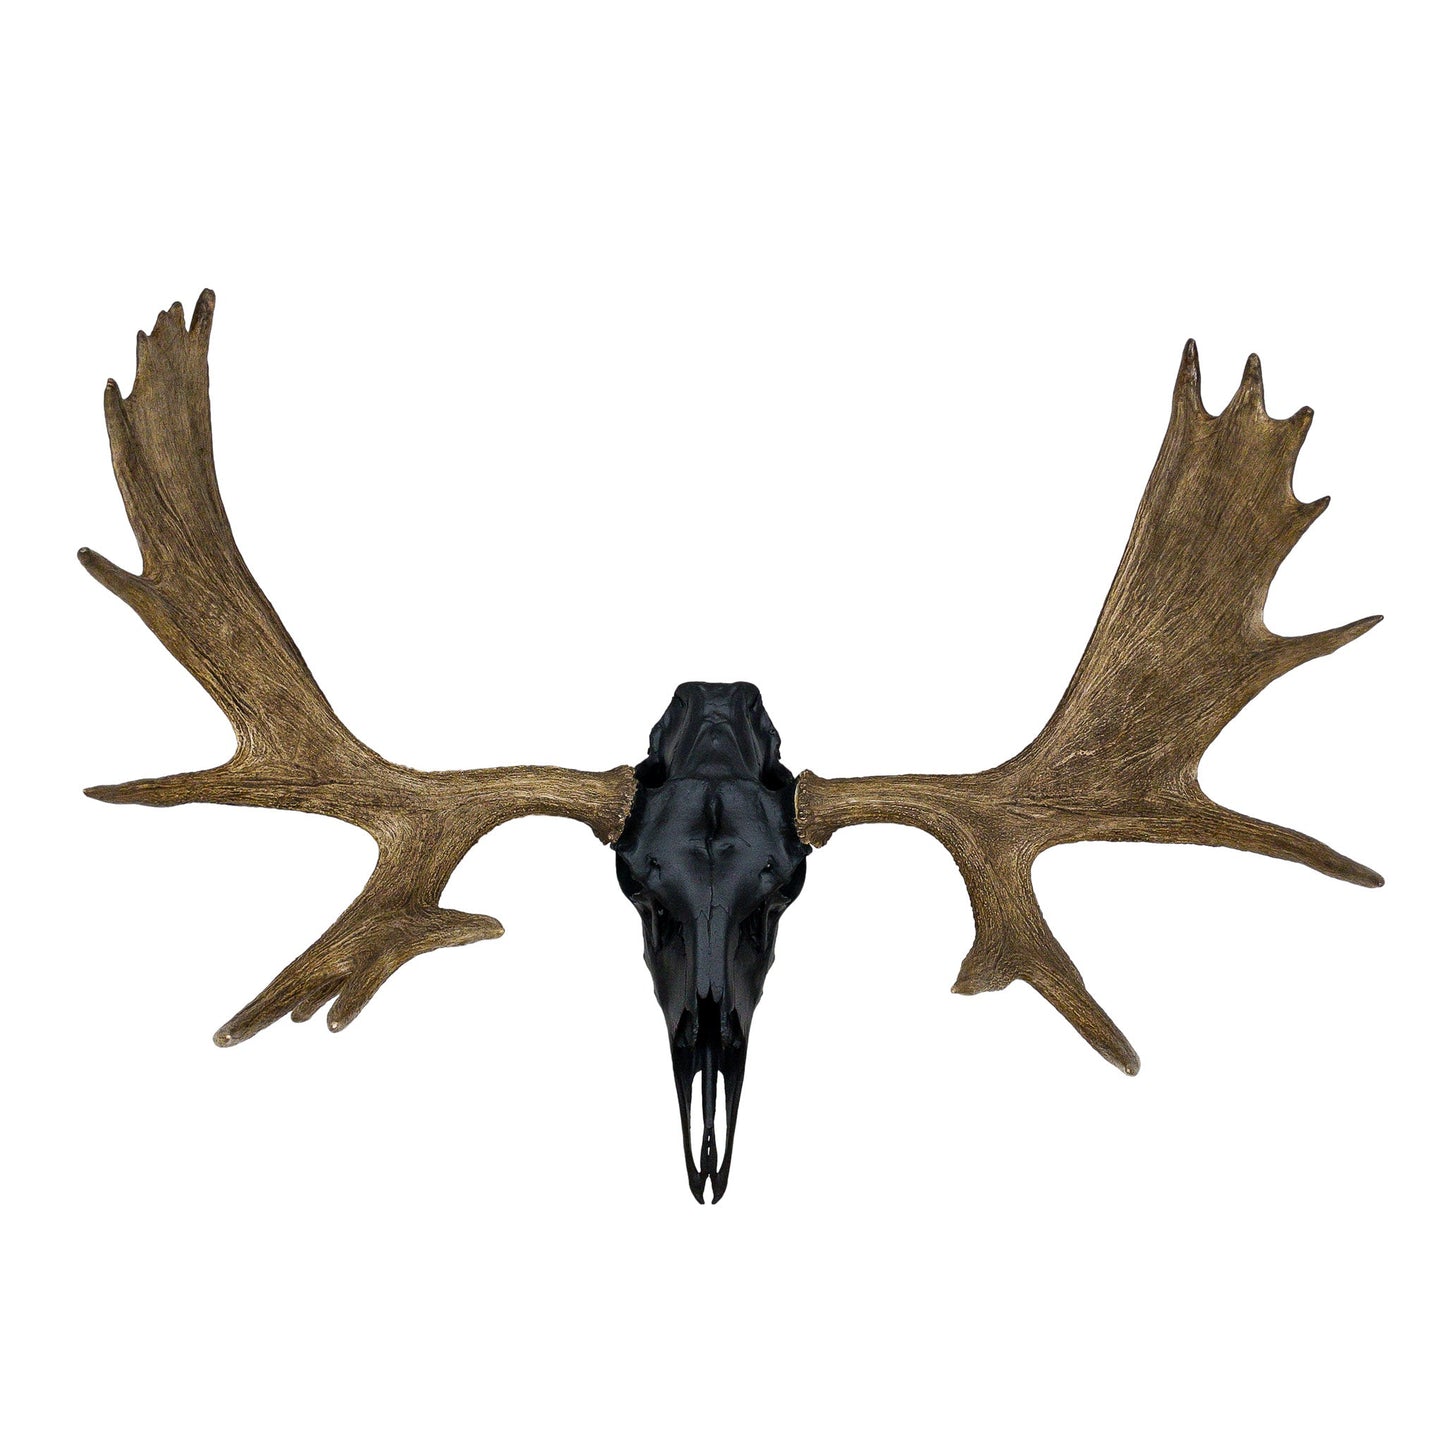 A Home Decor Taxidermy Moose European Skull of Grade Remarkable